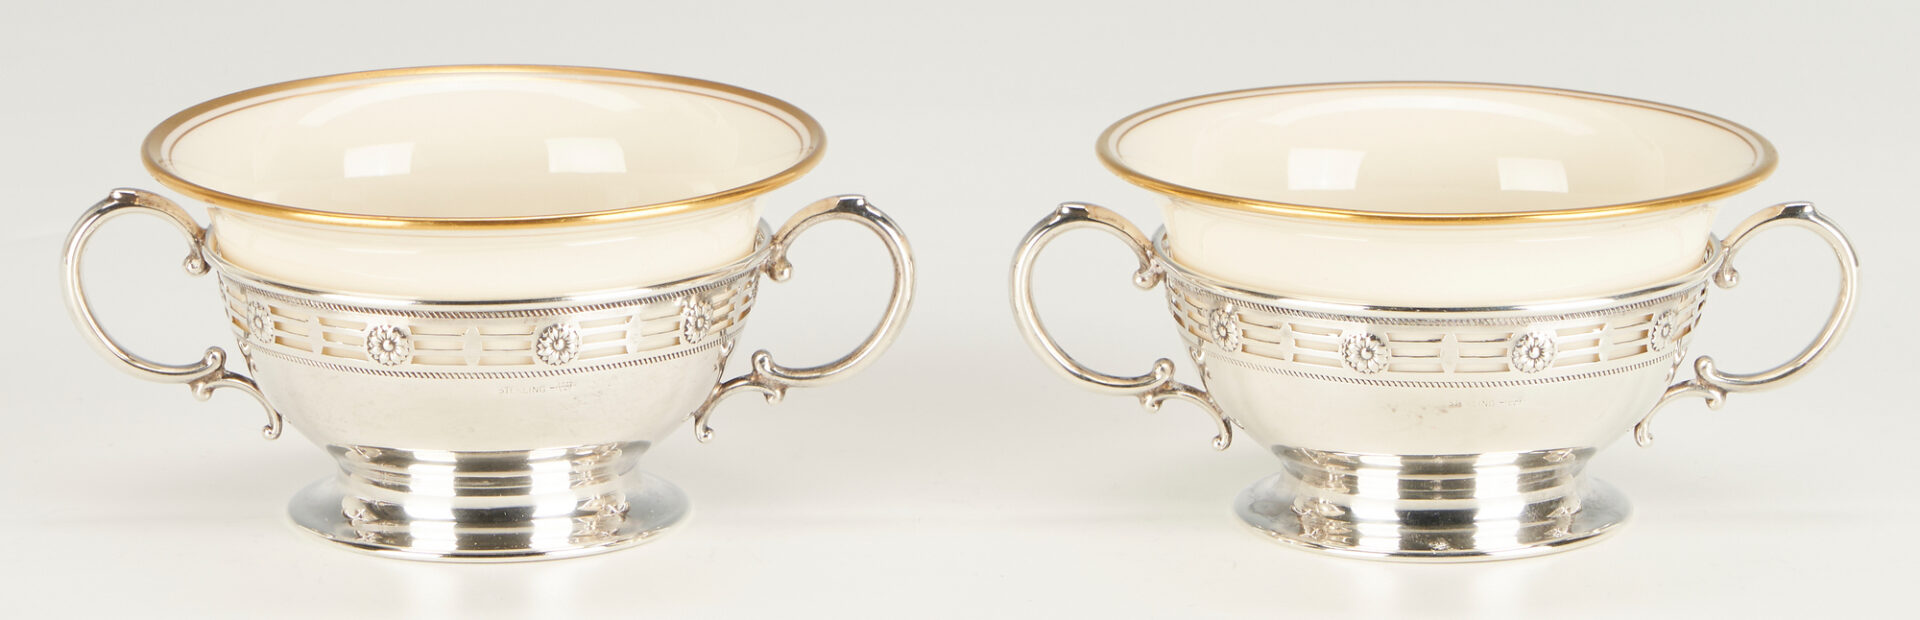 Lot 785: 30 Sterling Cups w/ Porcelain Inserts, Tiffany & Co, Webster, 42 pcs.